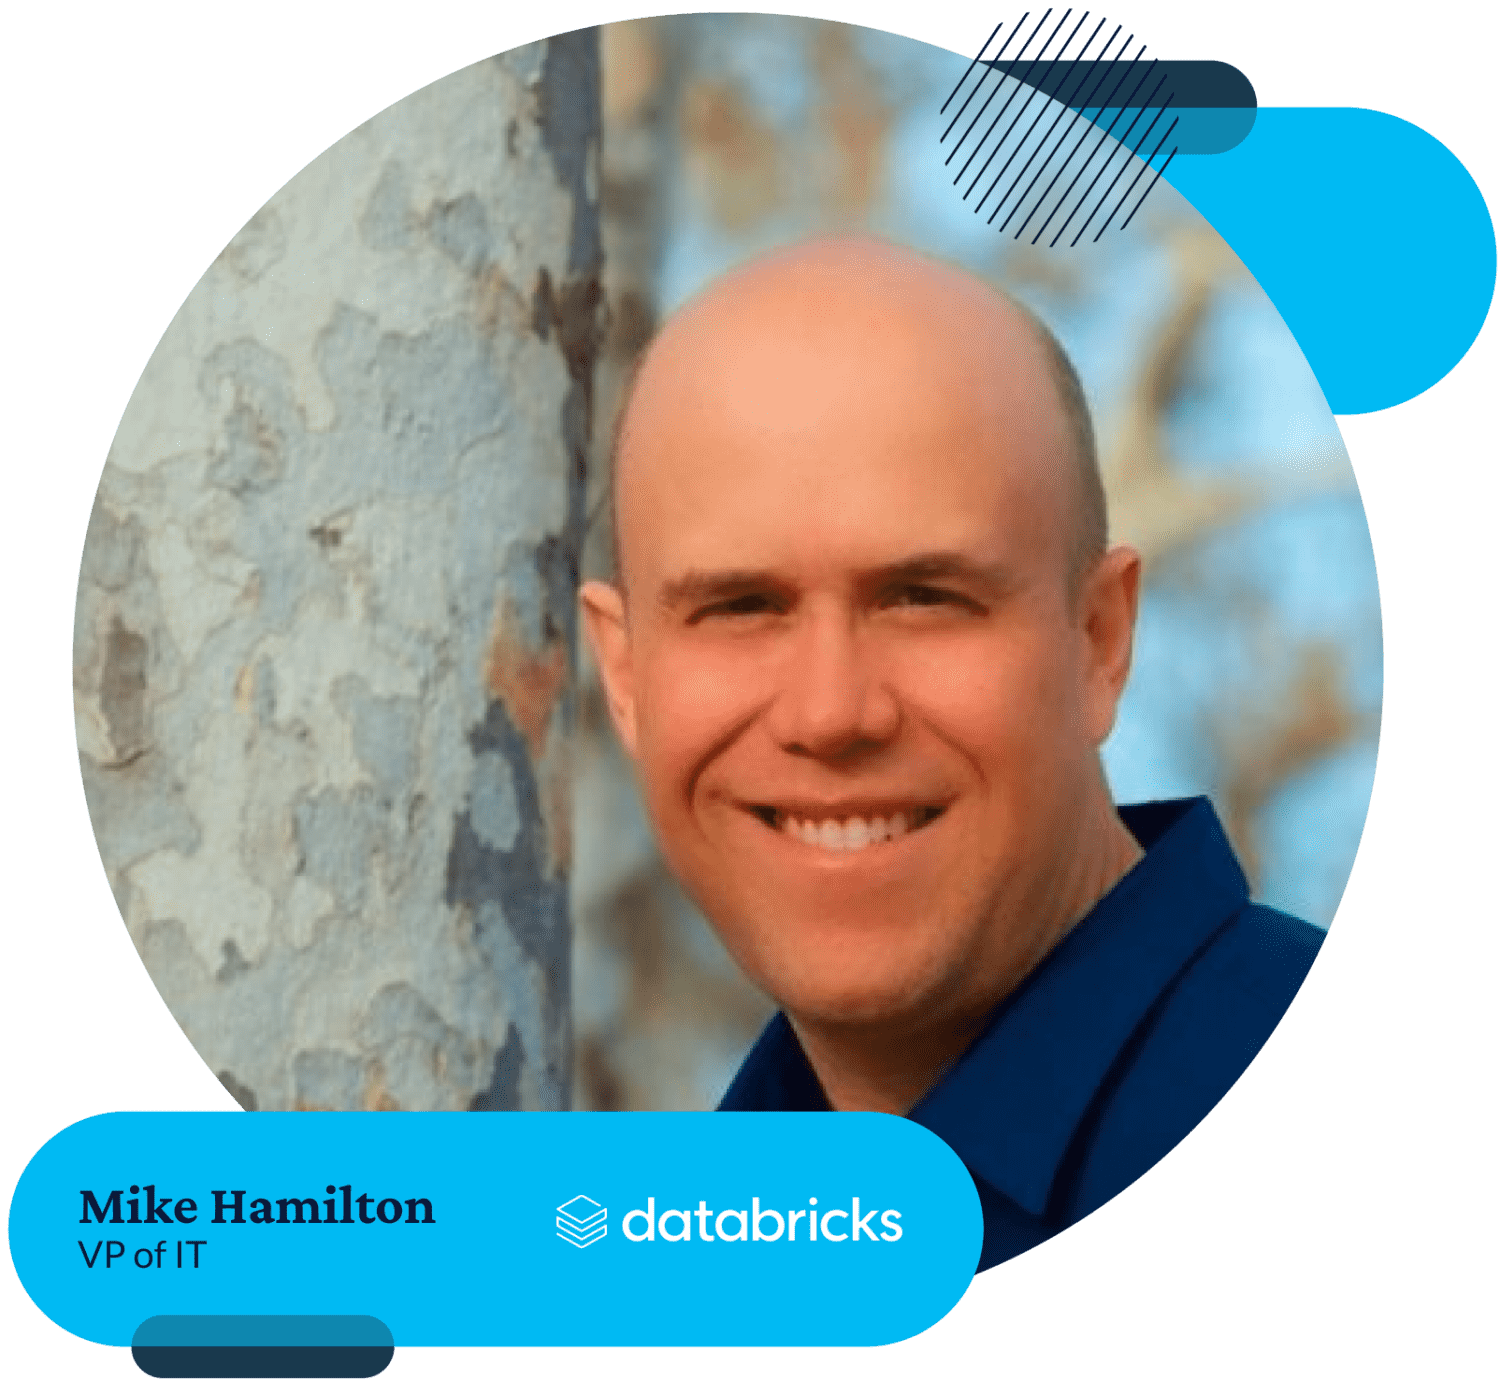 Mike Hamilton, Databricks